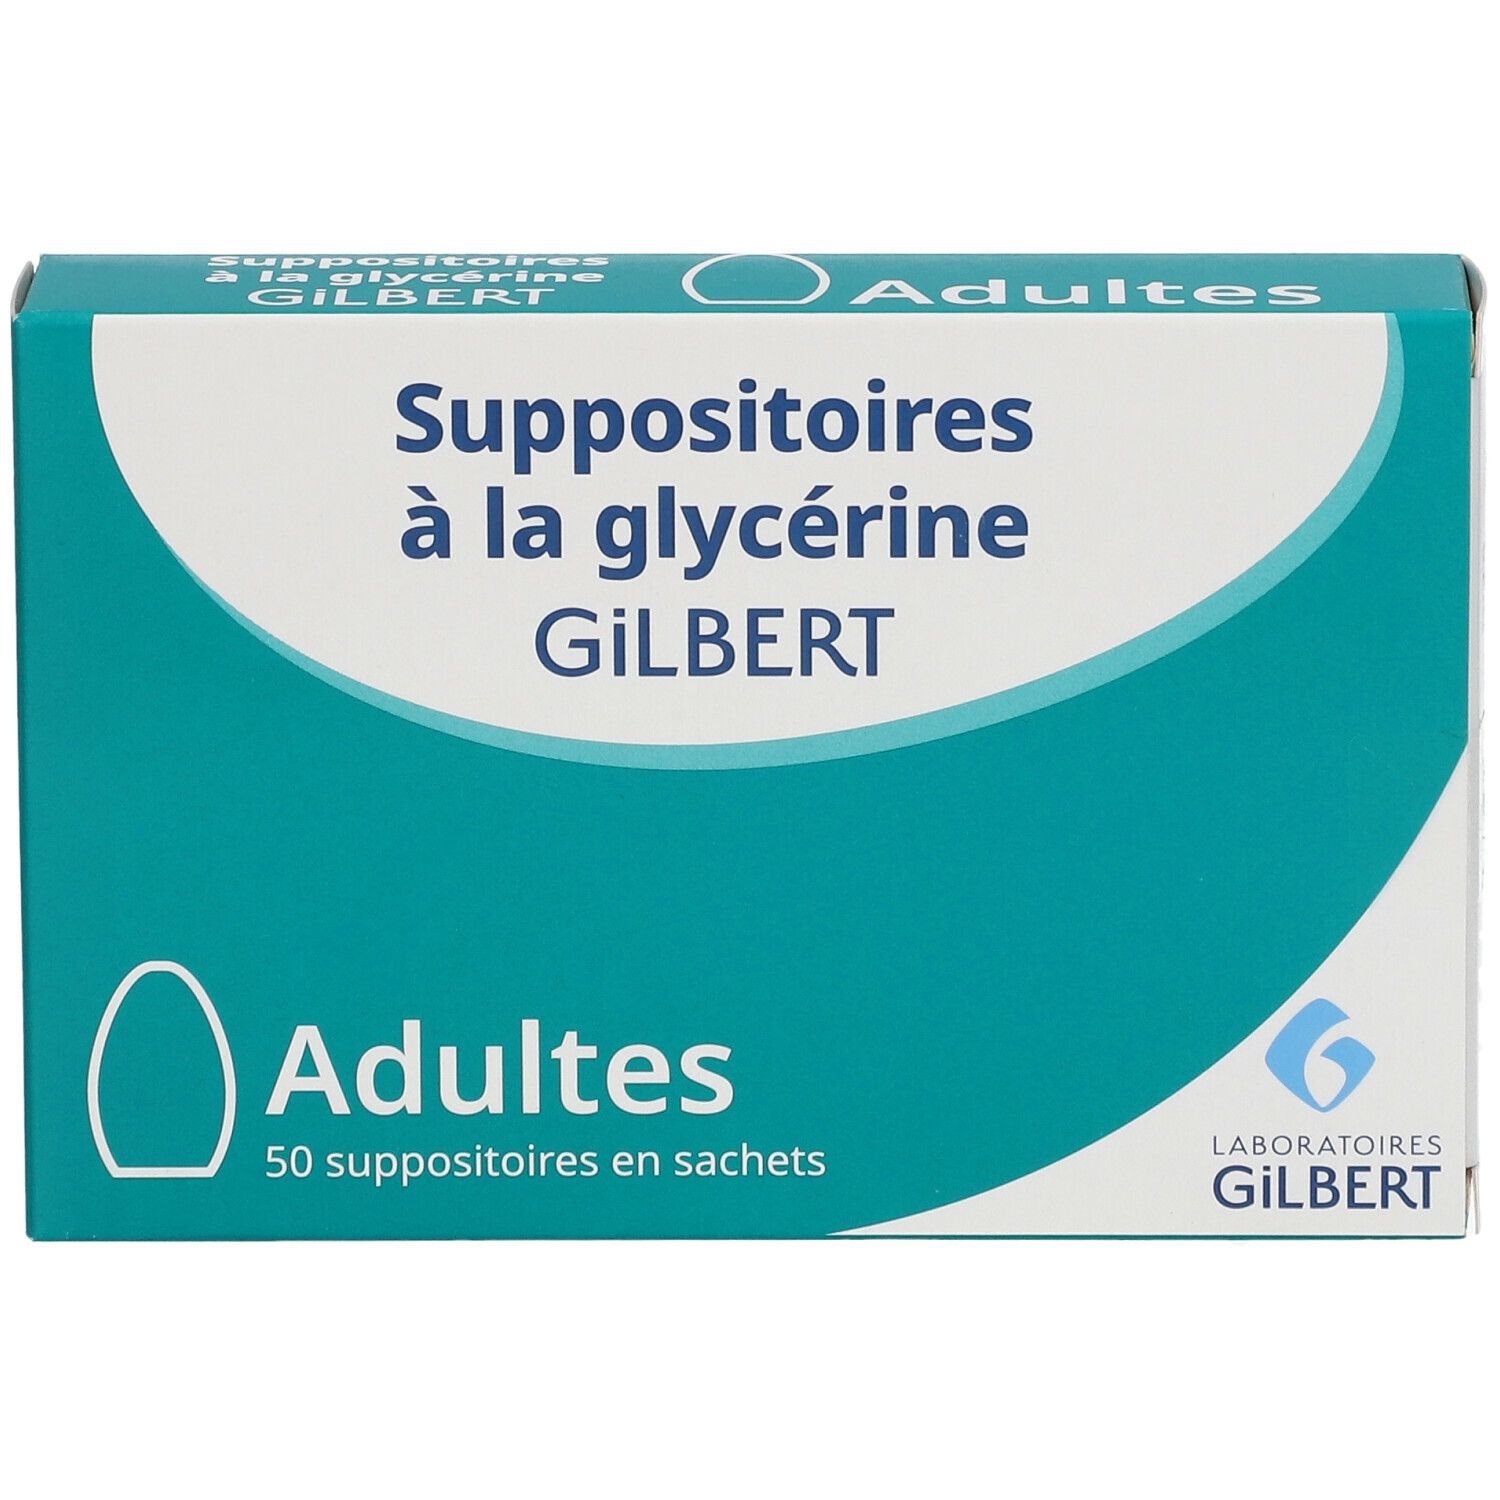 Gilbert Suppositoires à la glycérine